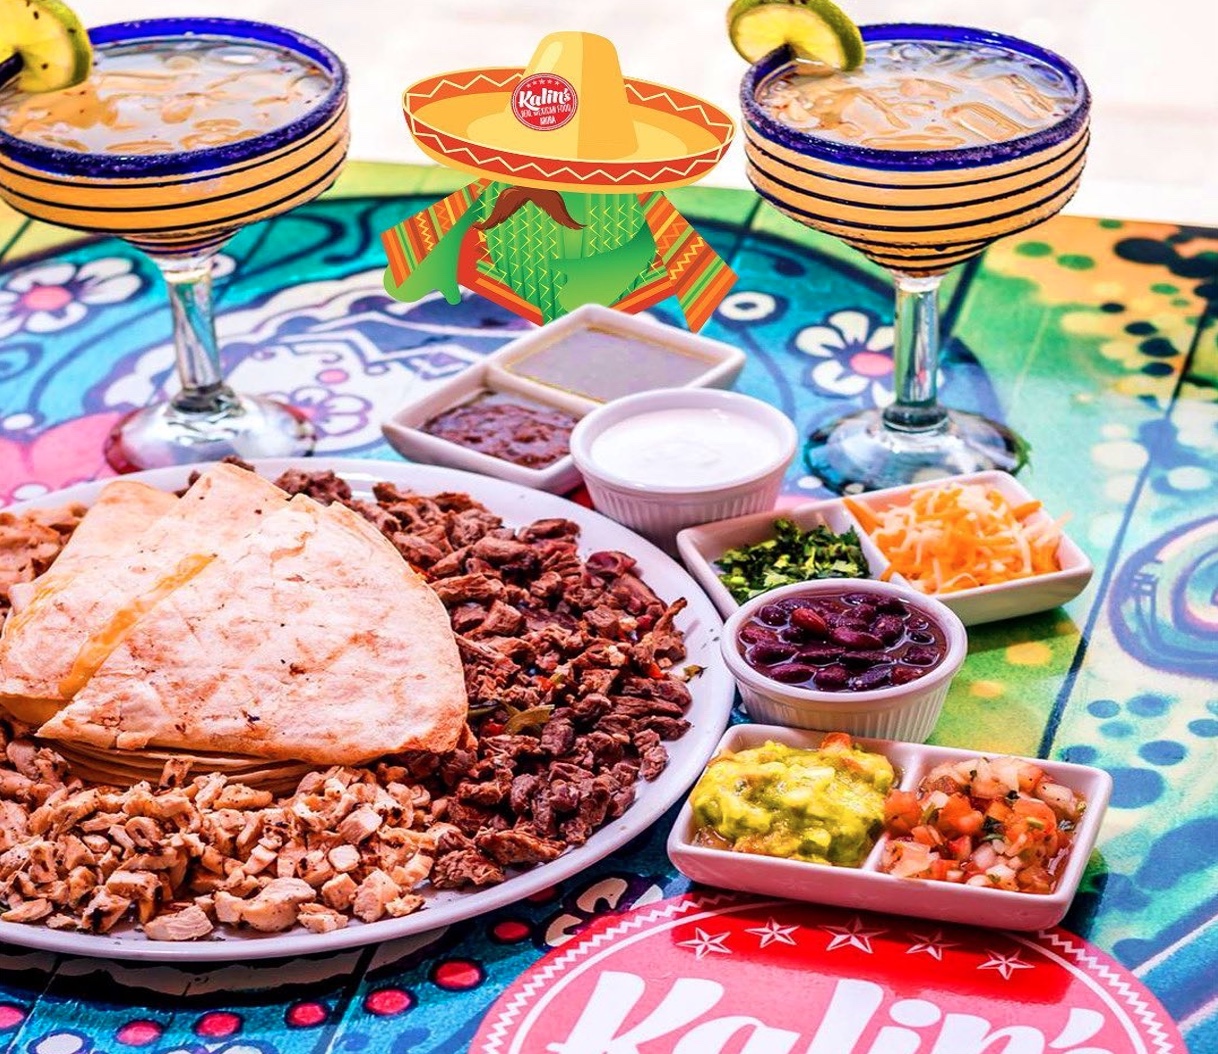 KALINS MEXICAN FOOD Aruba - vacaystore.com